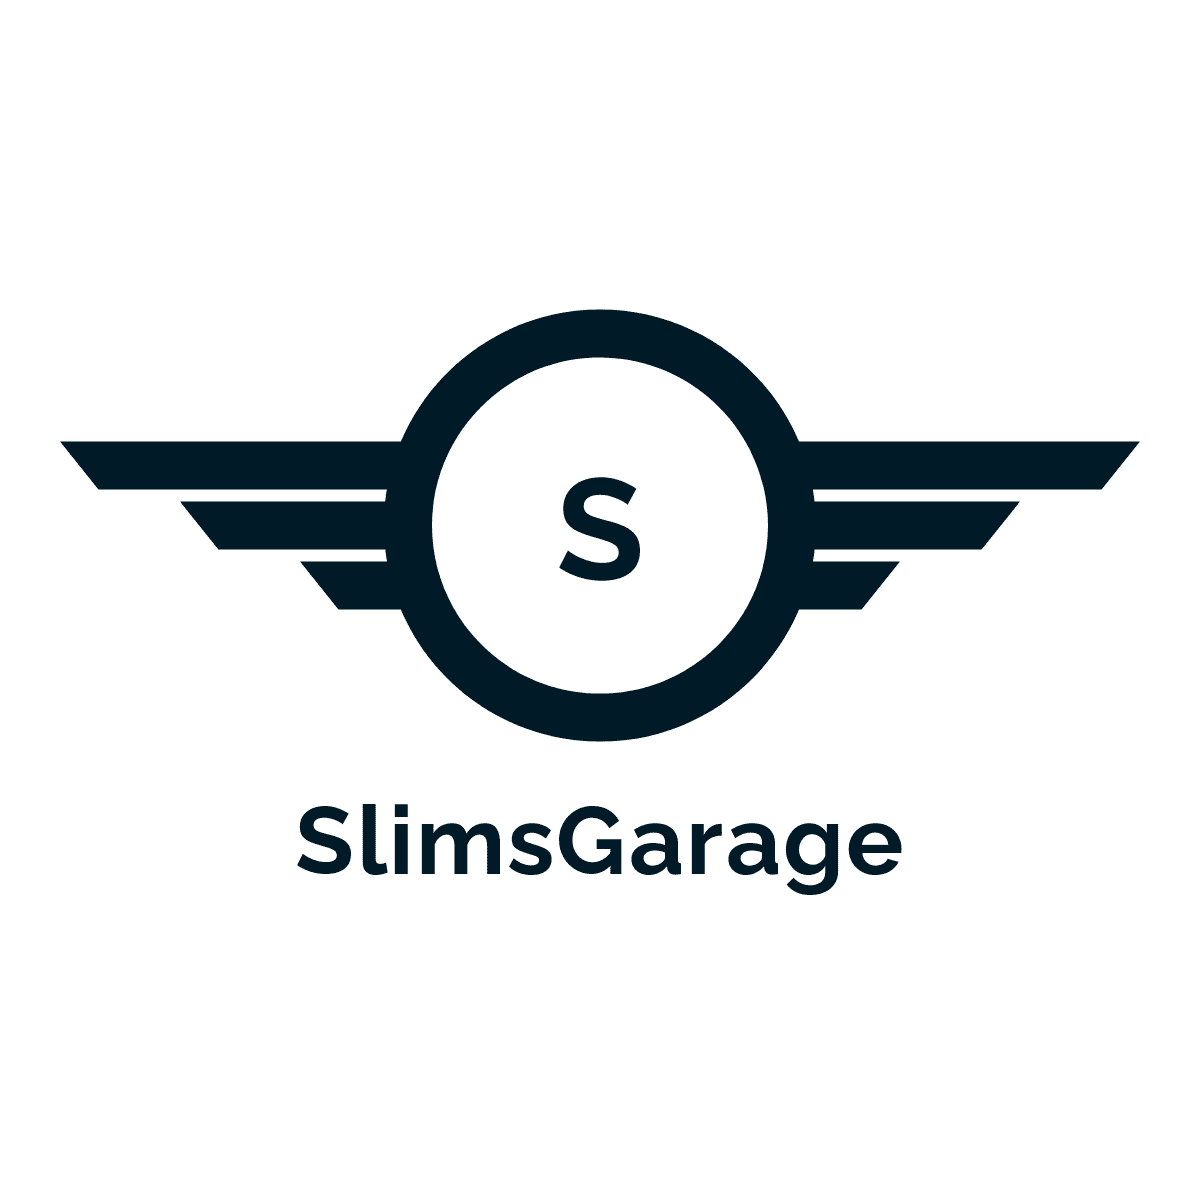 SlimsGarage